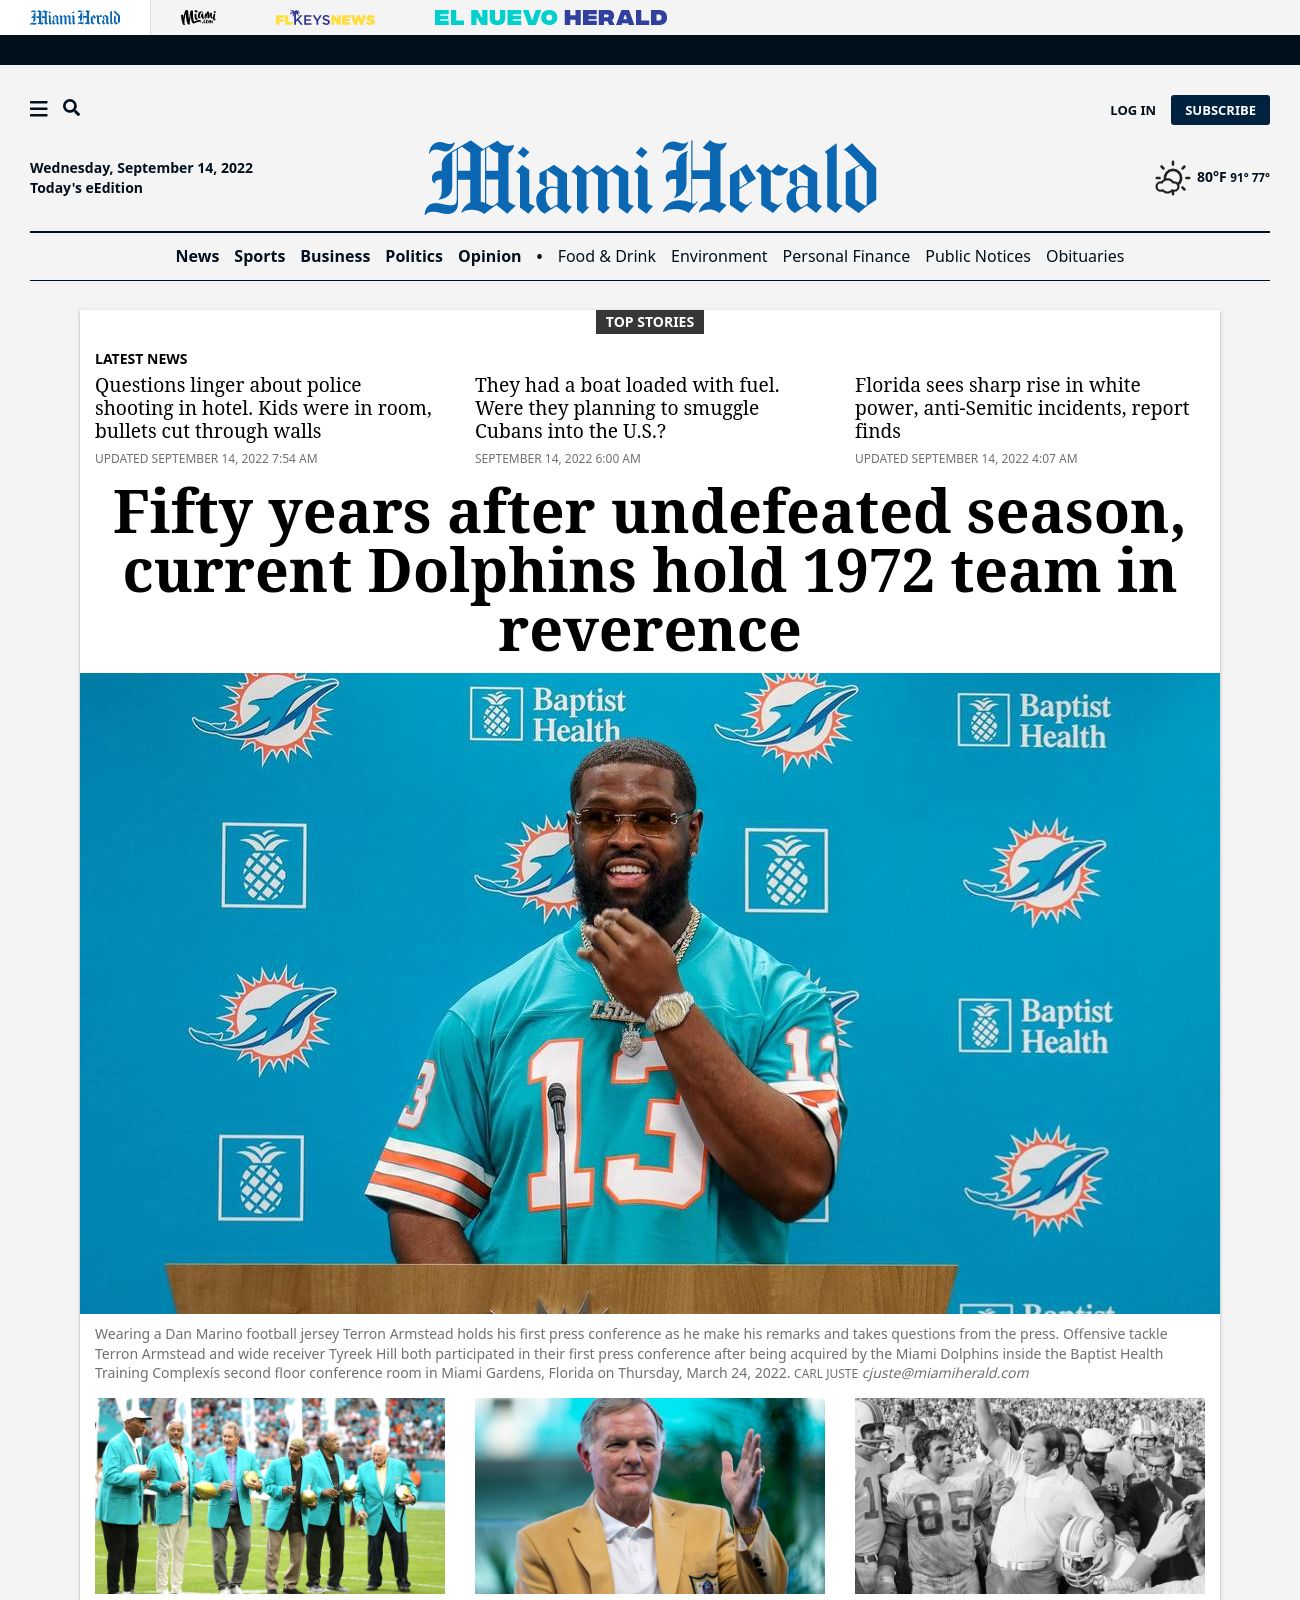 Miami Herald at 2022-09-14 09:05:48-04:00 local time